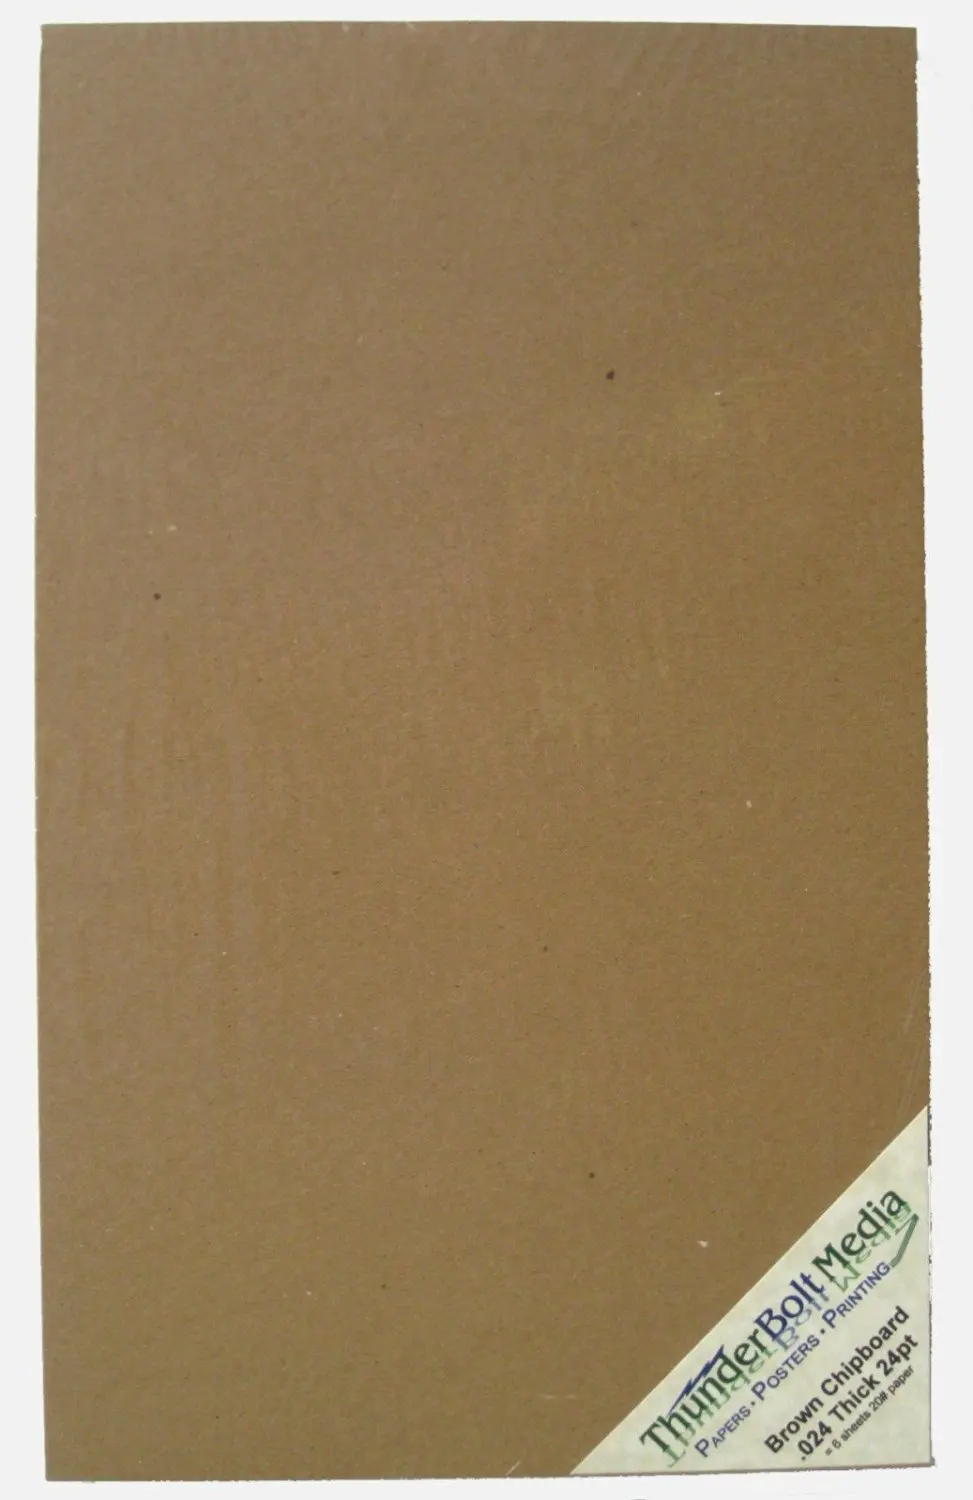 50 Sheets Chipboard 8 x 10 inch 22pt Light Weight Brown Kraft Cardboard